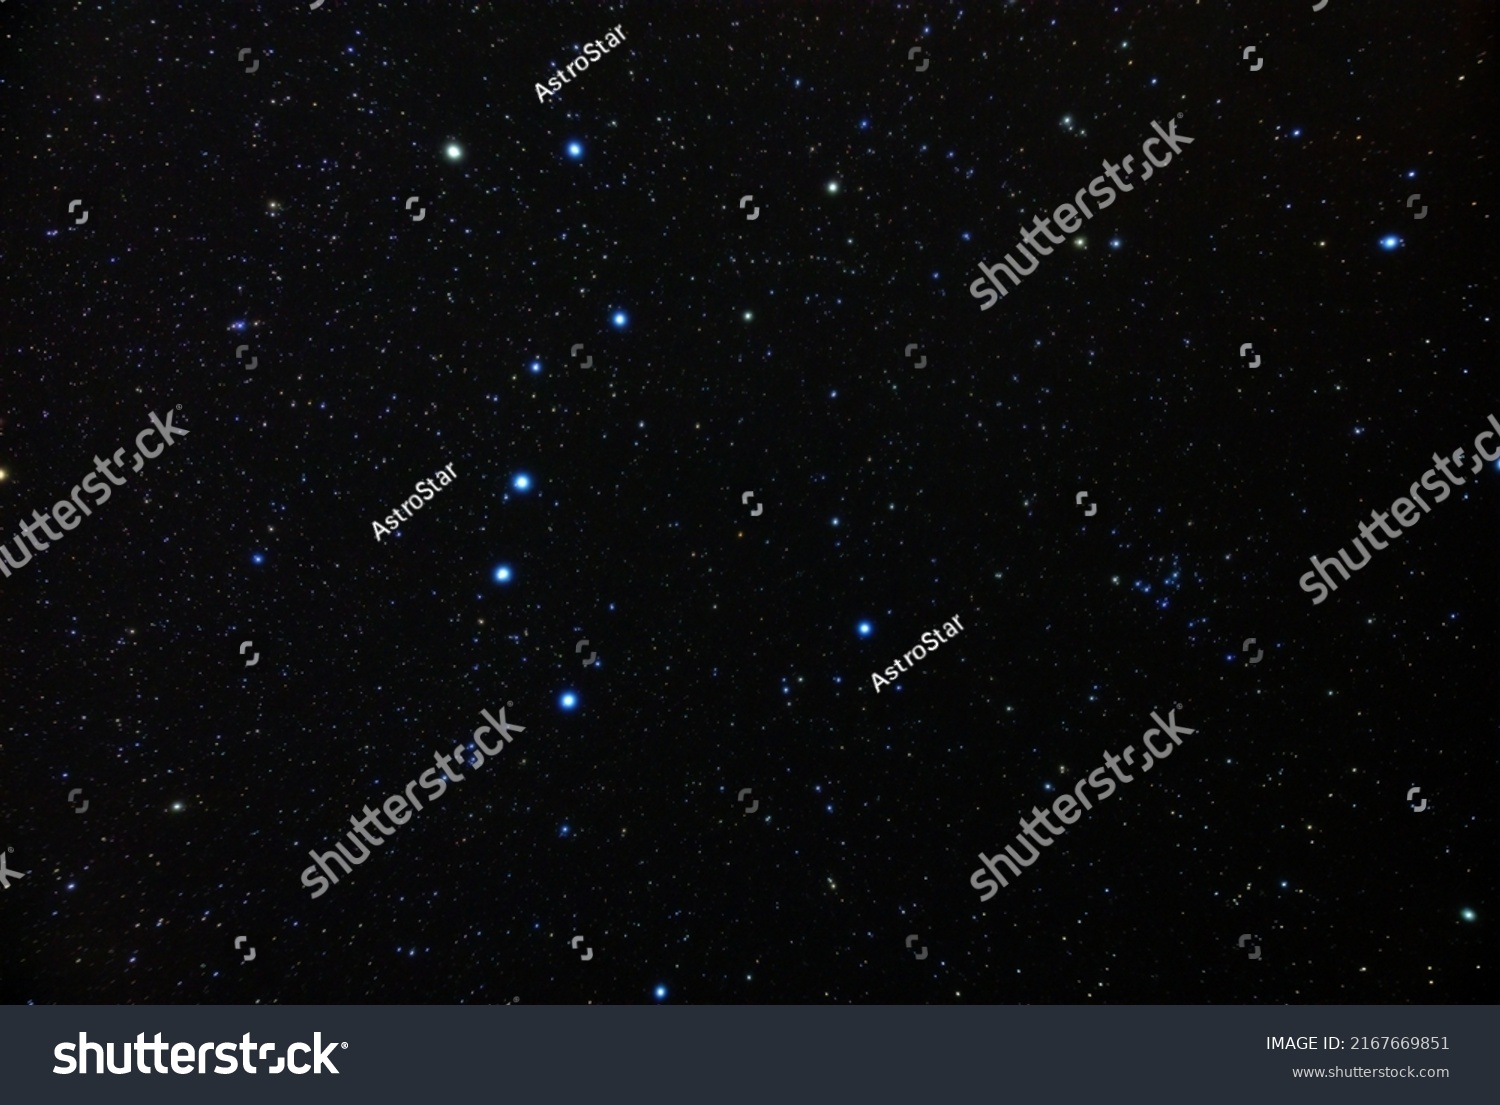 Milky Way stars and Ursa Major - Big Dipper constellation. #2167669851